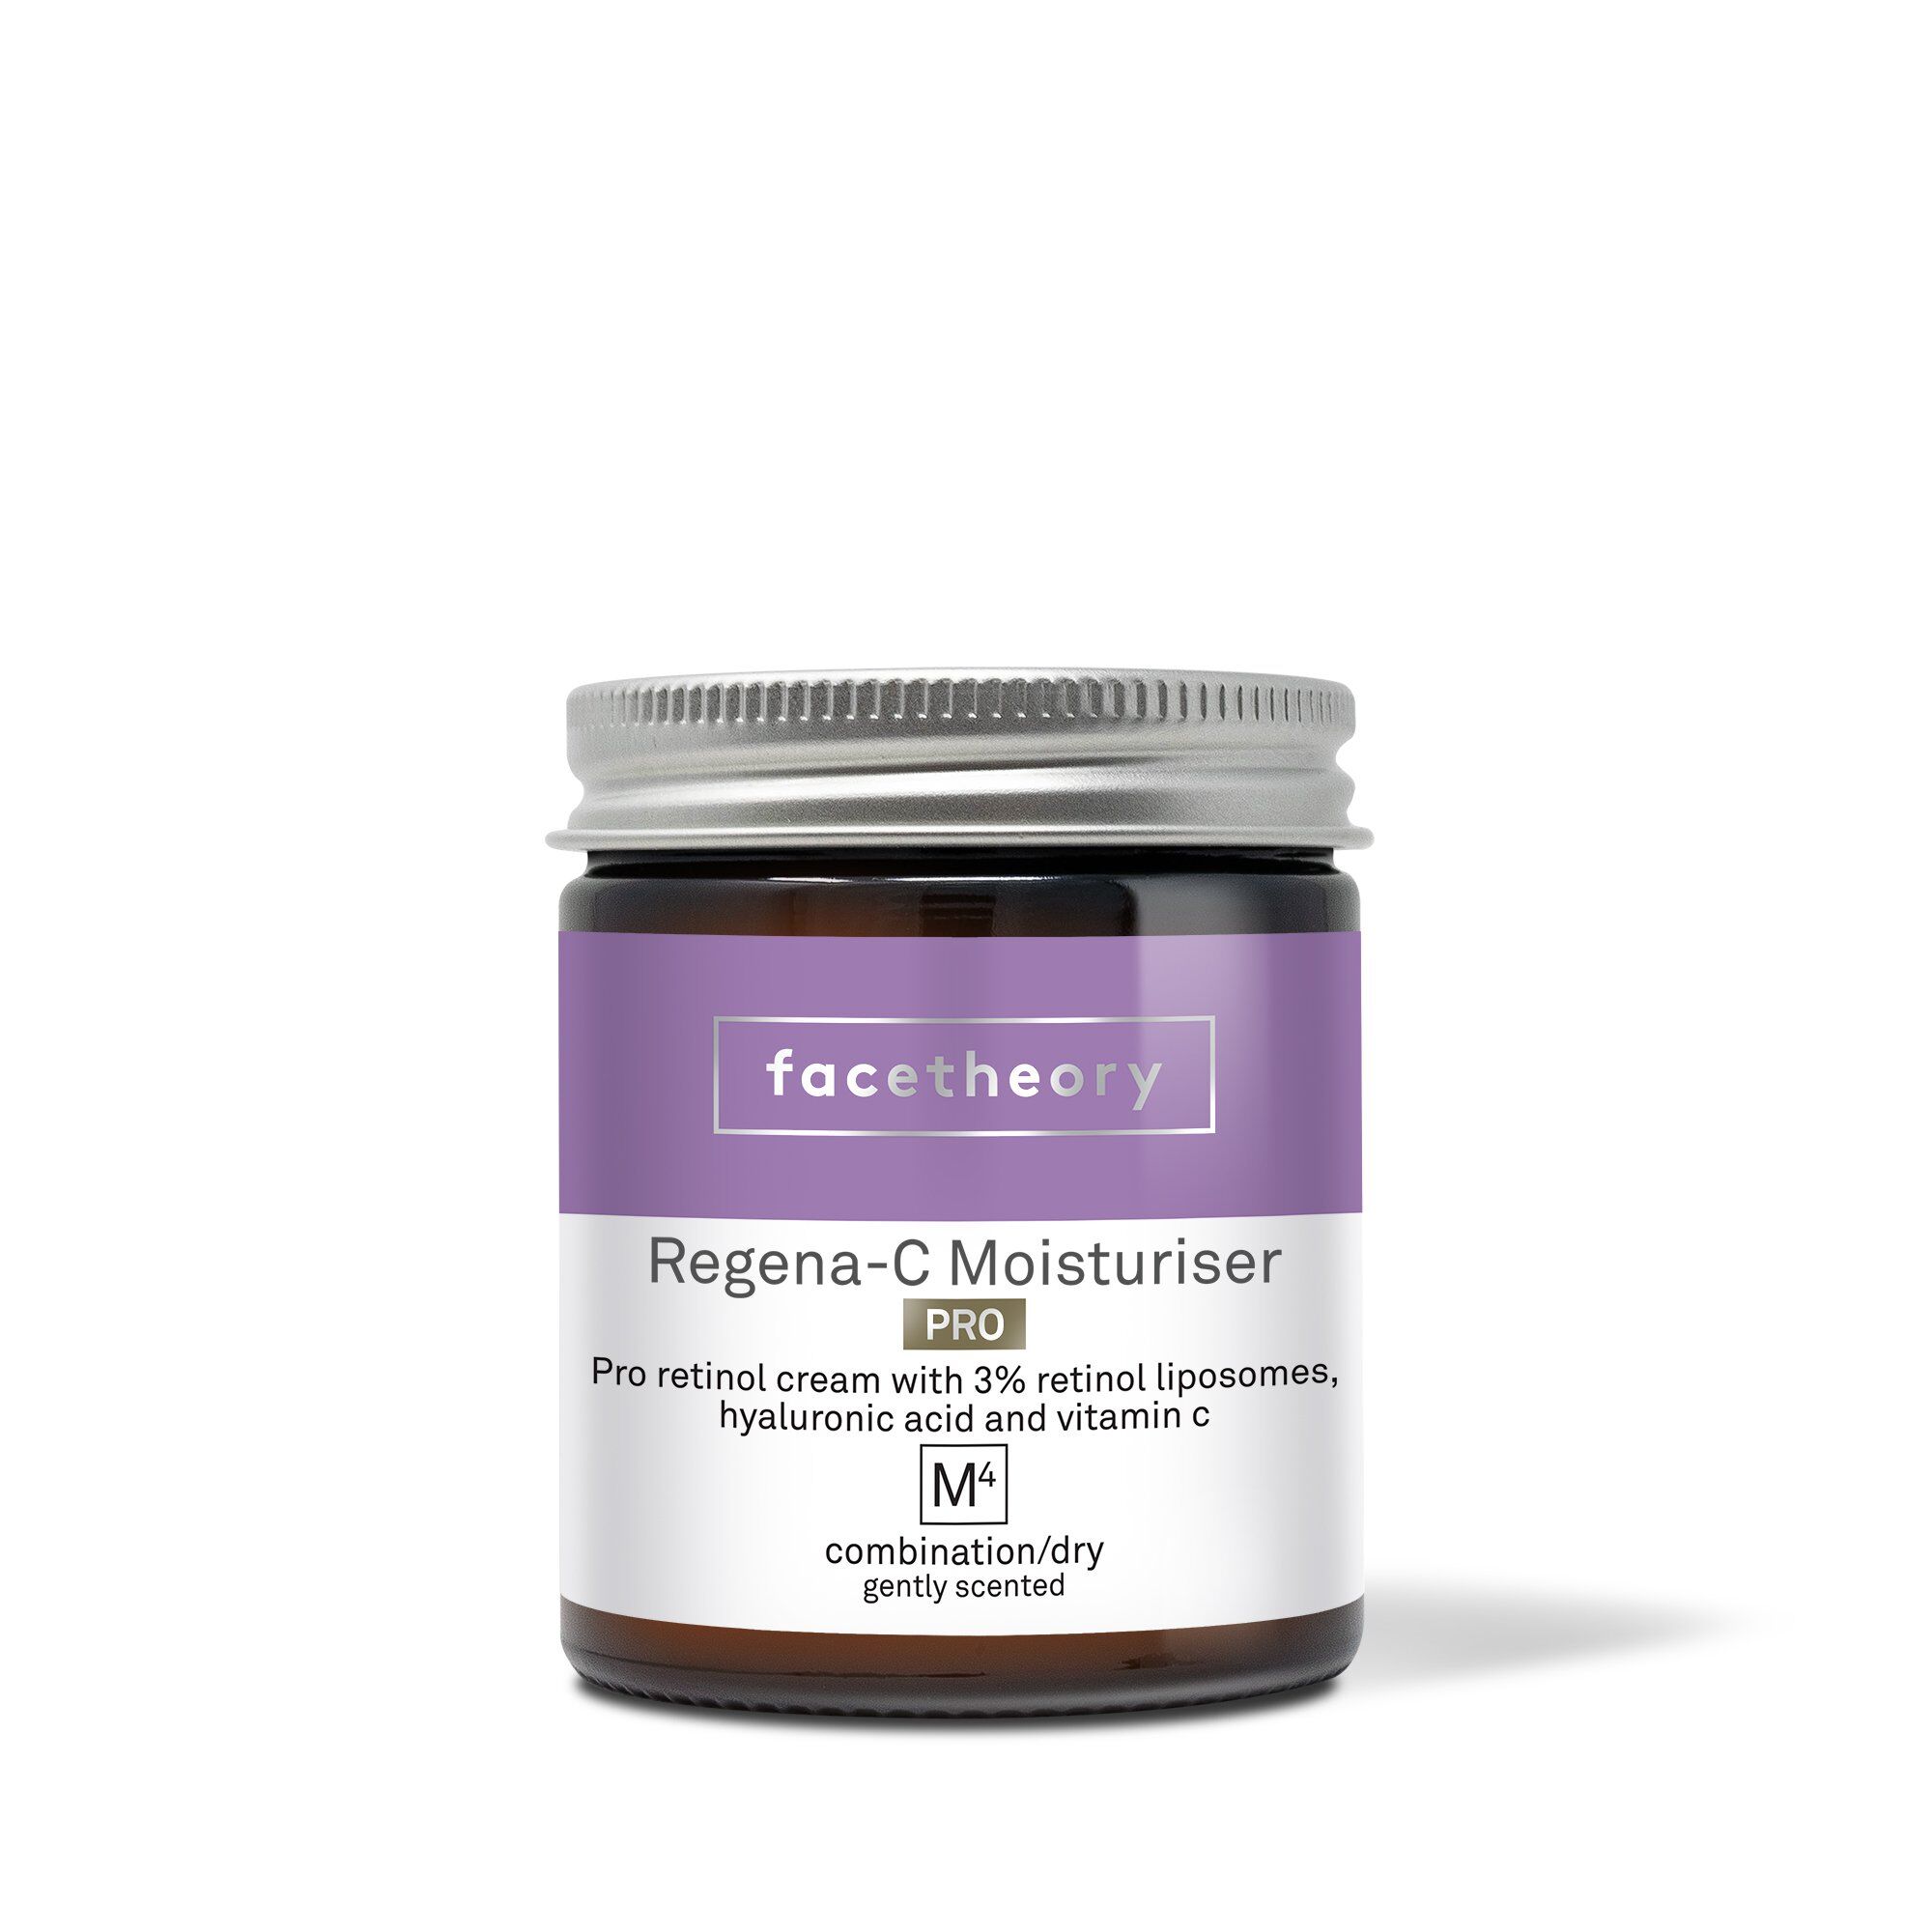 Facetheory - Regena-C Moisturiser M4 Pro with 3% Retinol Liposomes, Hyaluronic Acid and Vitamin C Mandarin Glass Jar